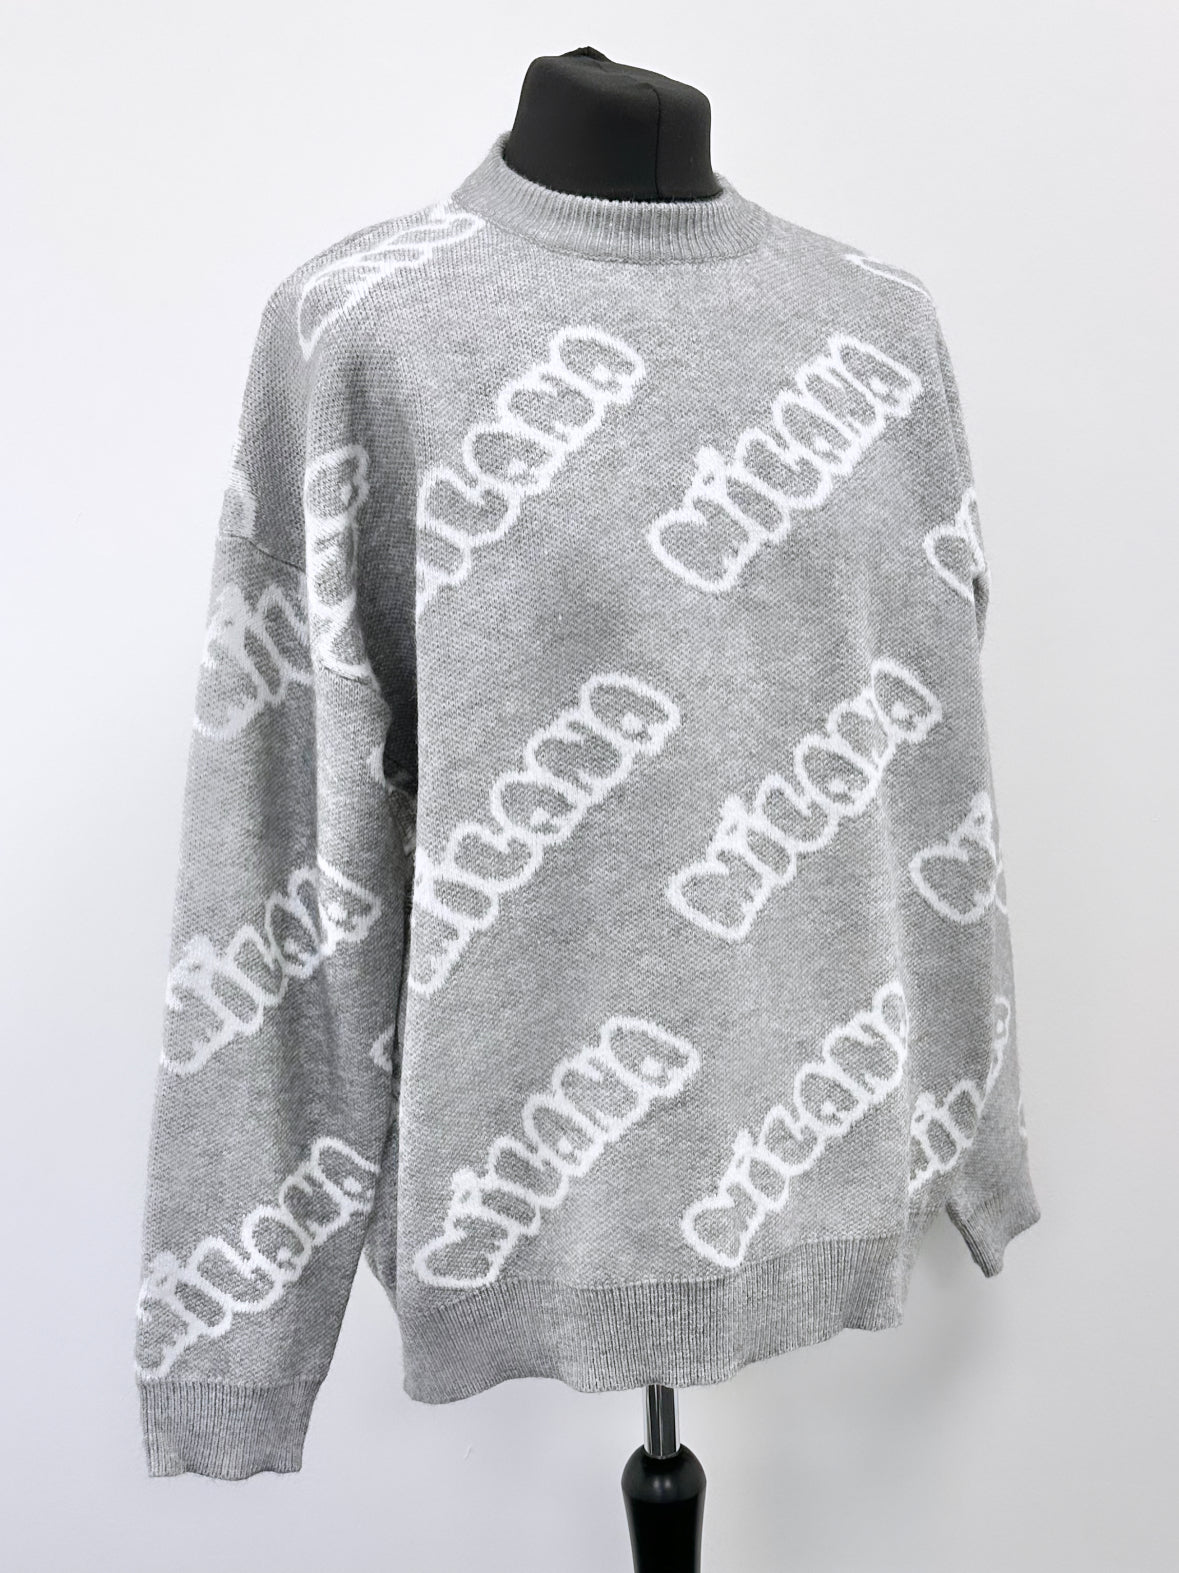 Marl Grey Bubble Heavyweight Knitted Sweatshirt.